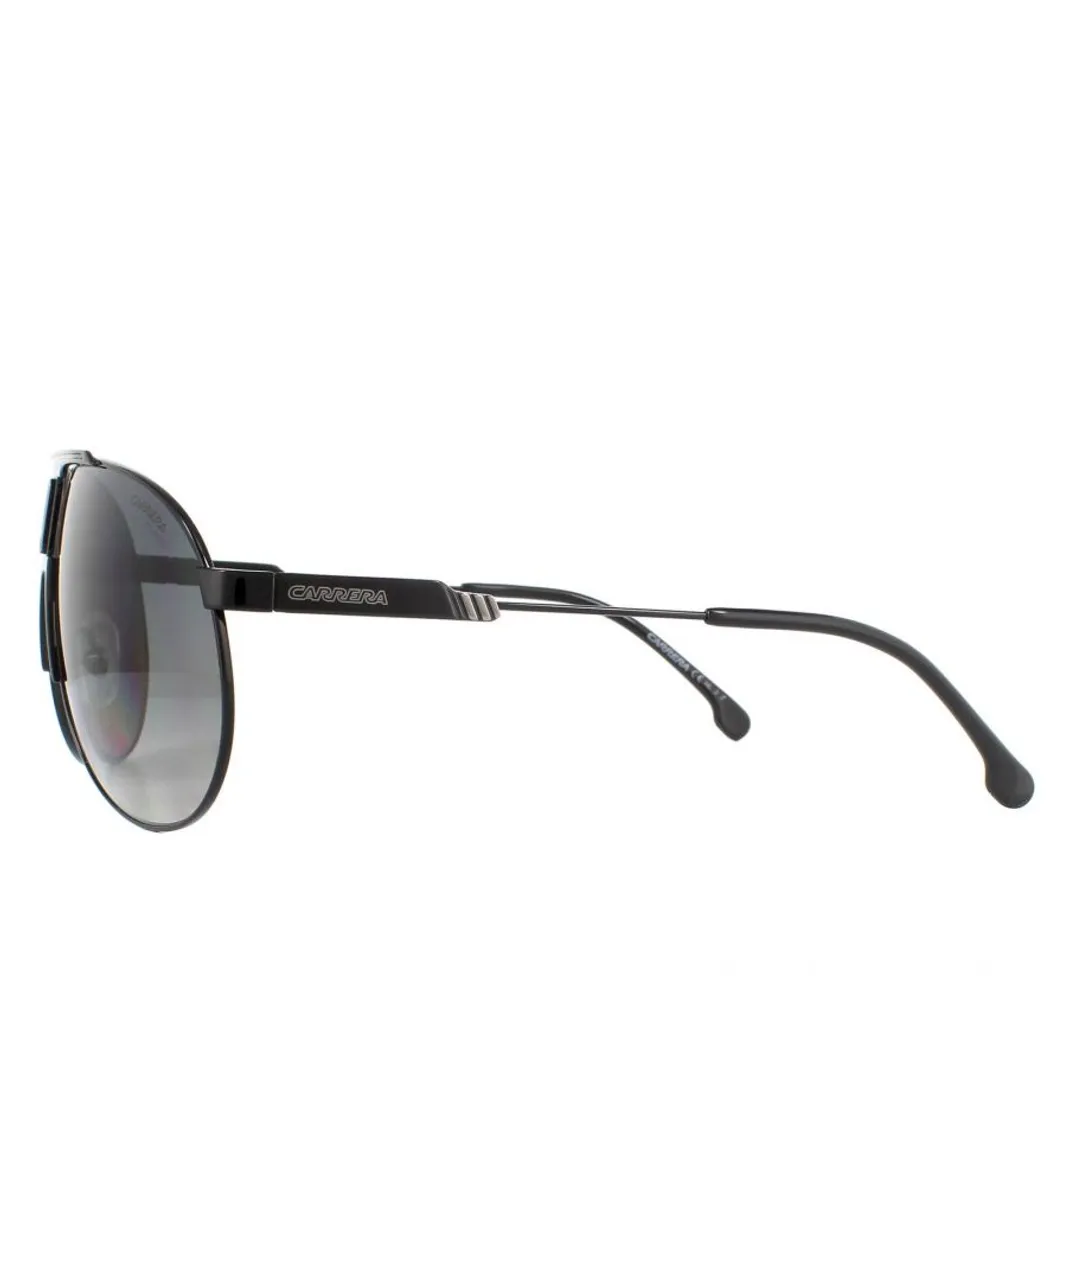 Carrera Mens Sunglasses Panamerika65 KJ1 WJ Dark Ruthenium Grey Polarized Metal - One